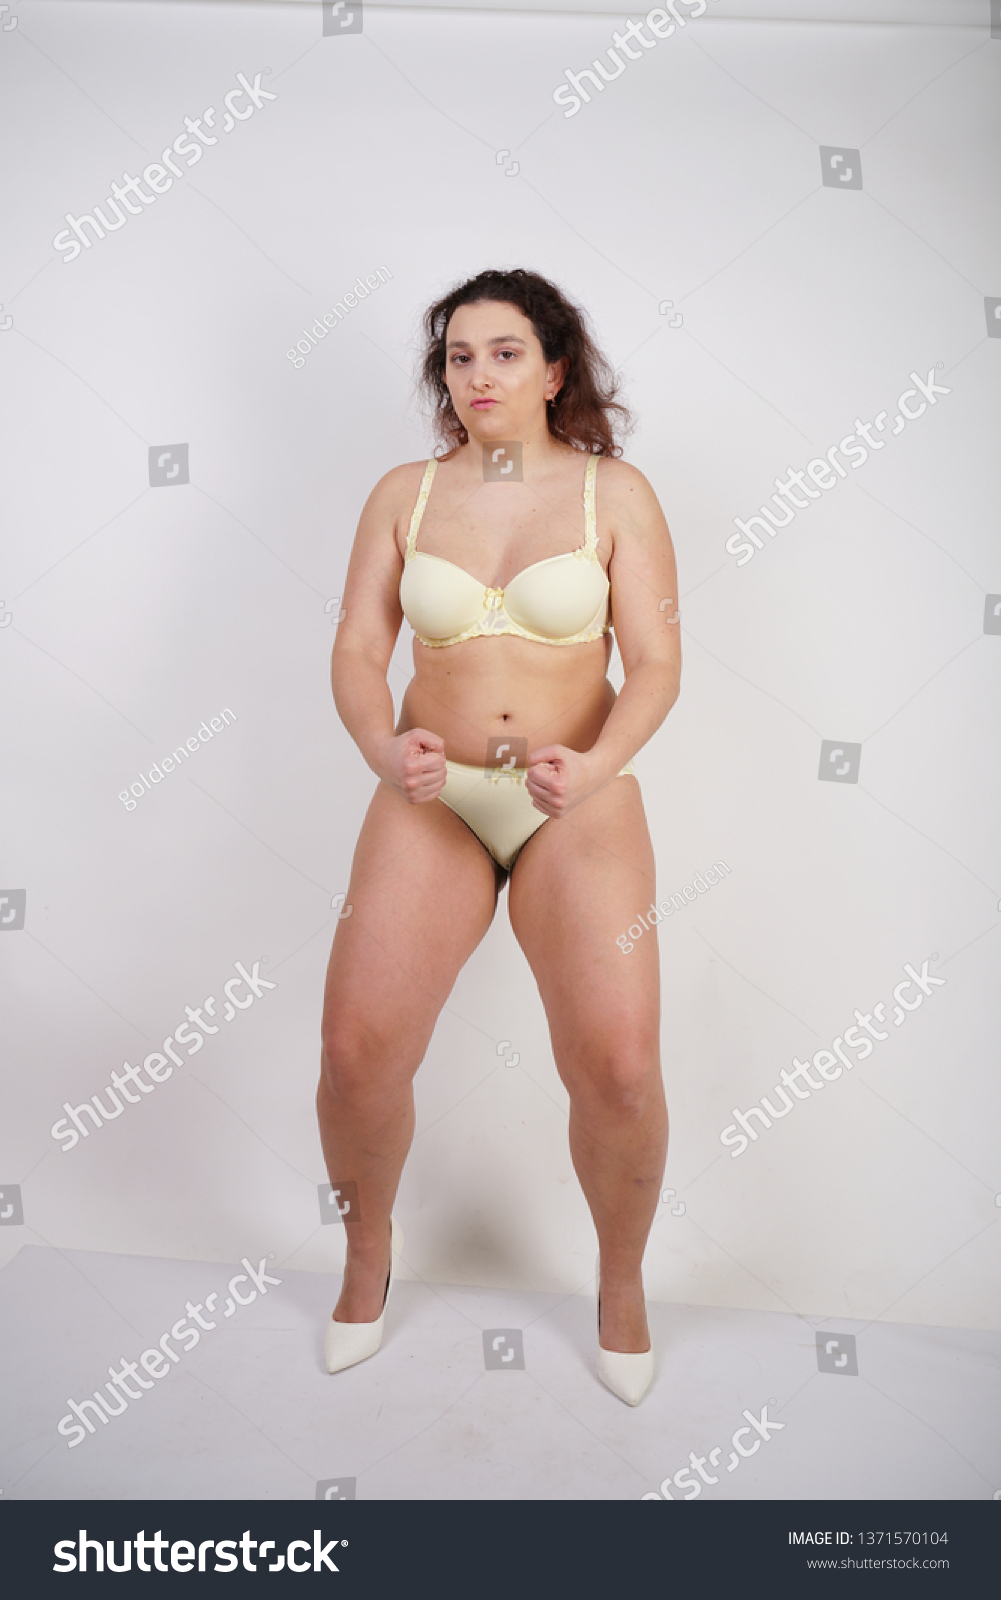 bette mcclure share plump girls in lingerie photos